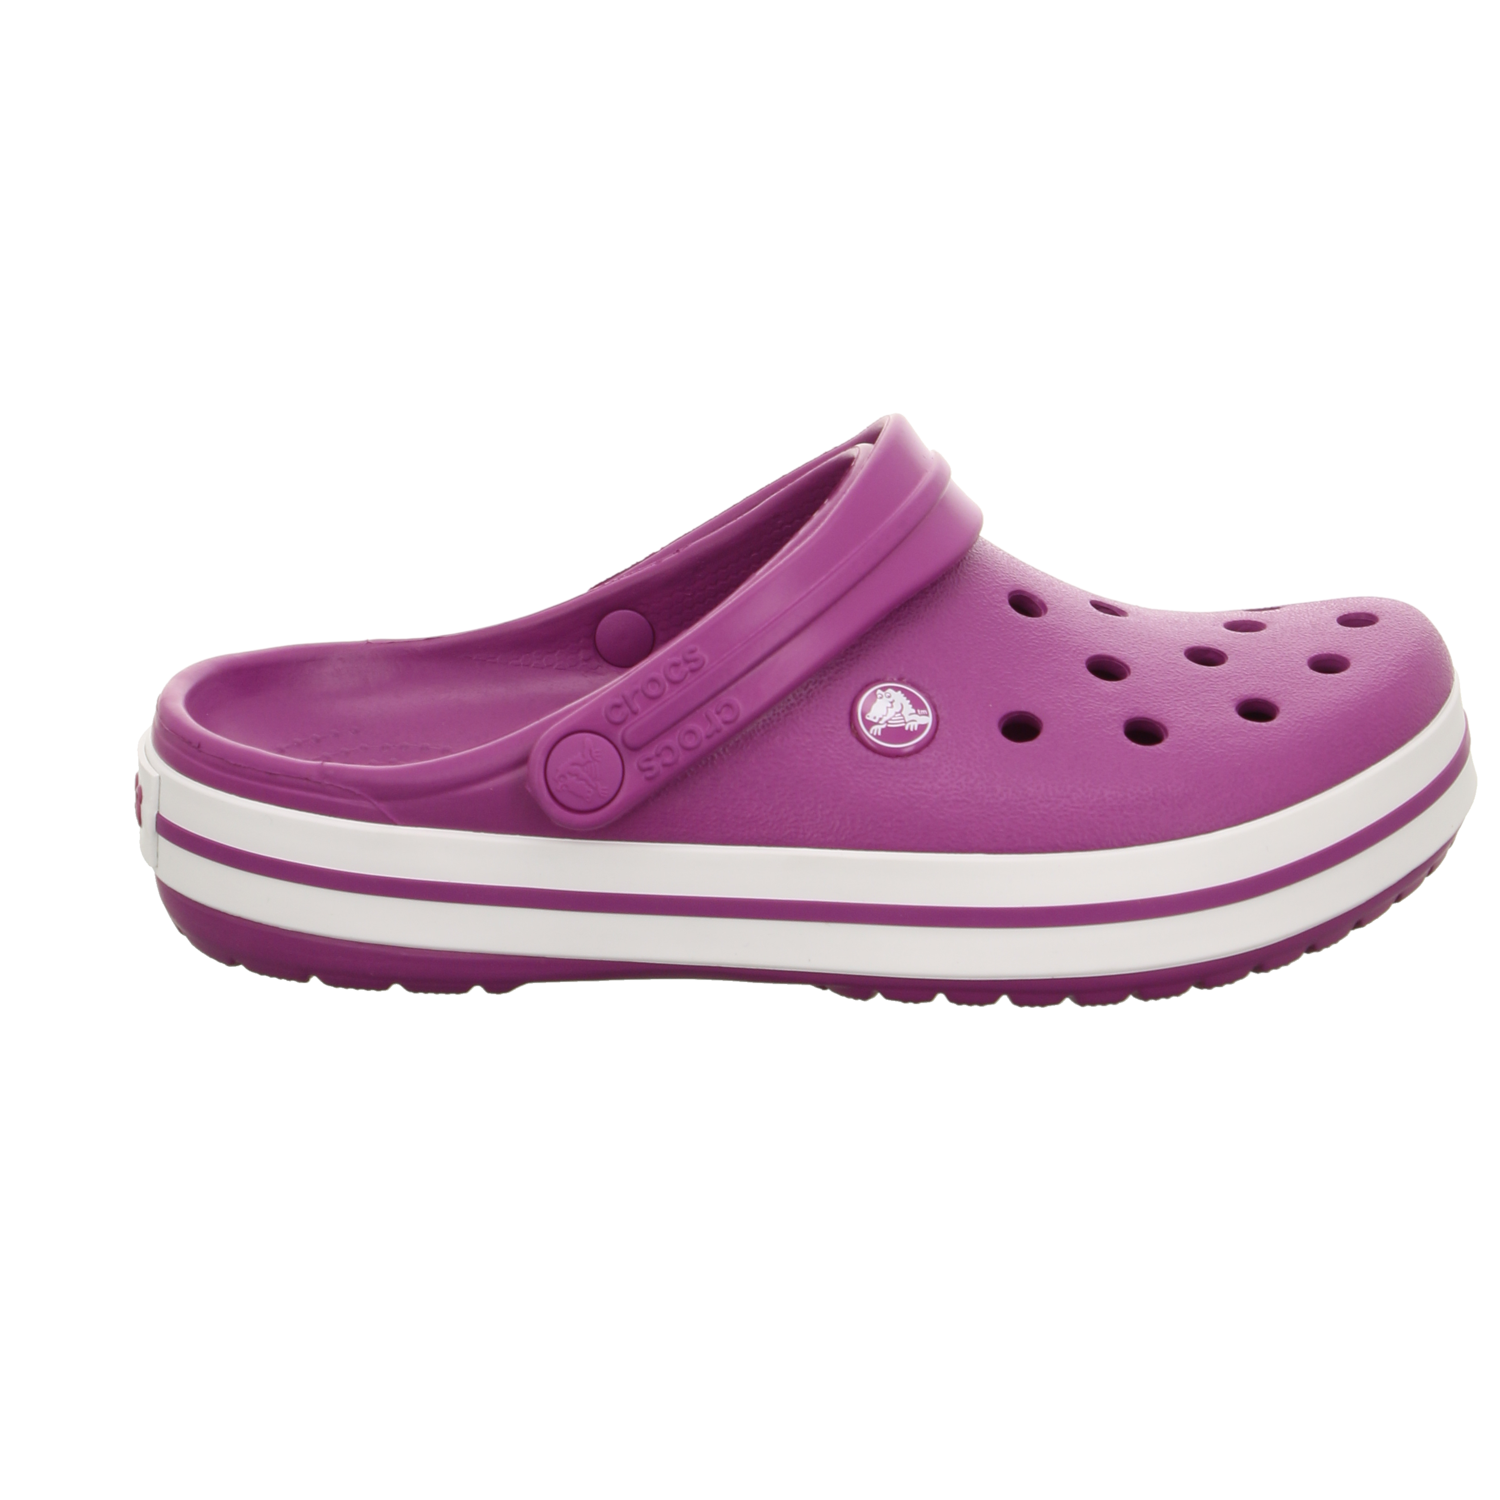 Crocs Damen-Clogs violett